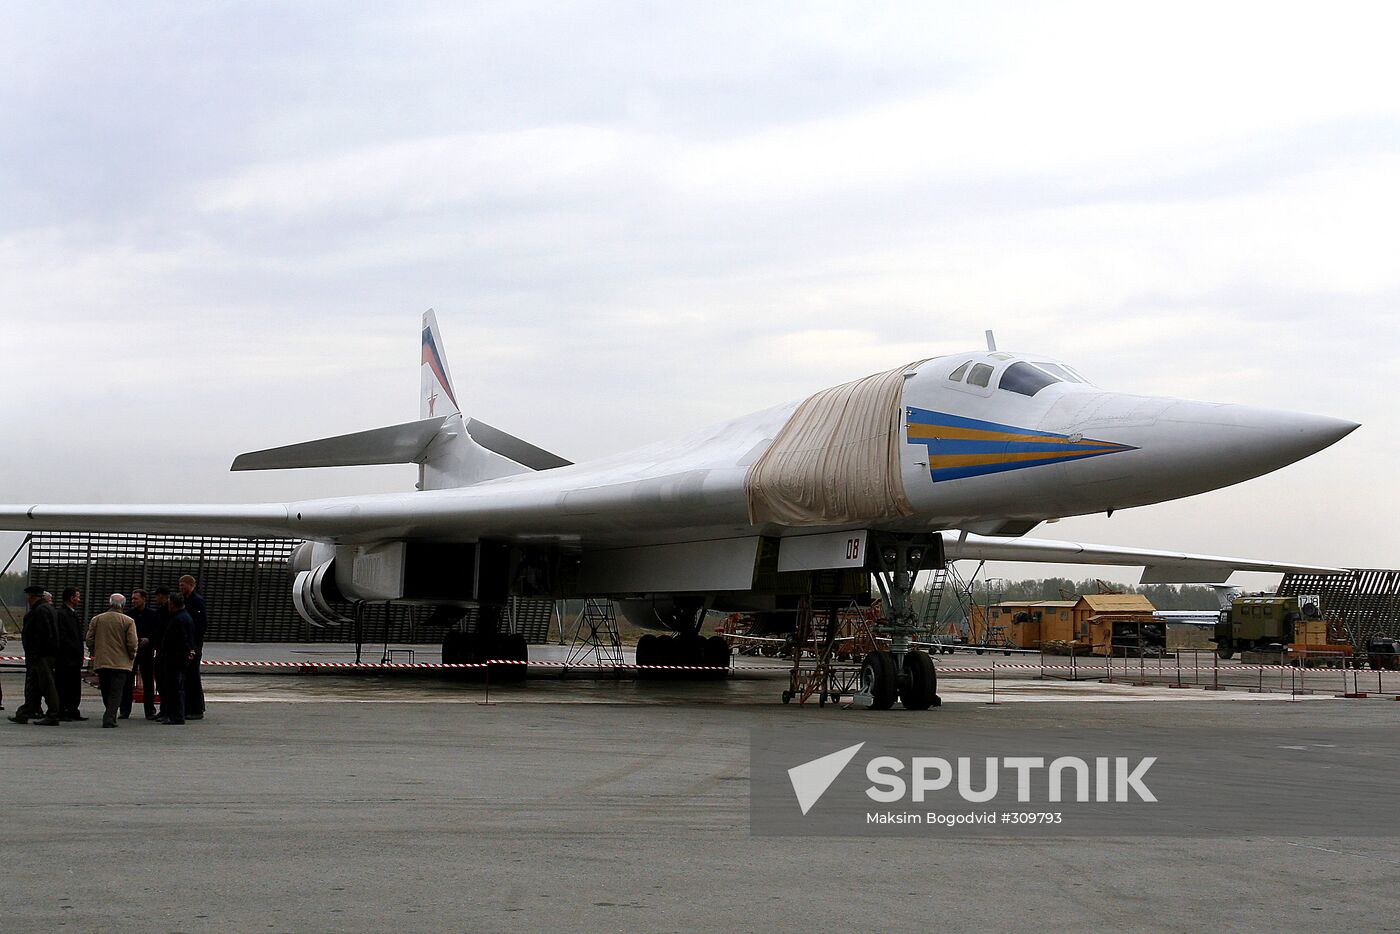 Tu-160 Blackjack supersonic strategic bomber